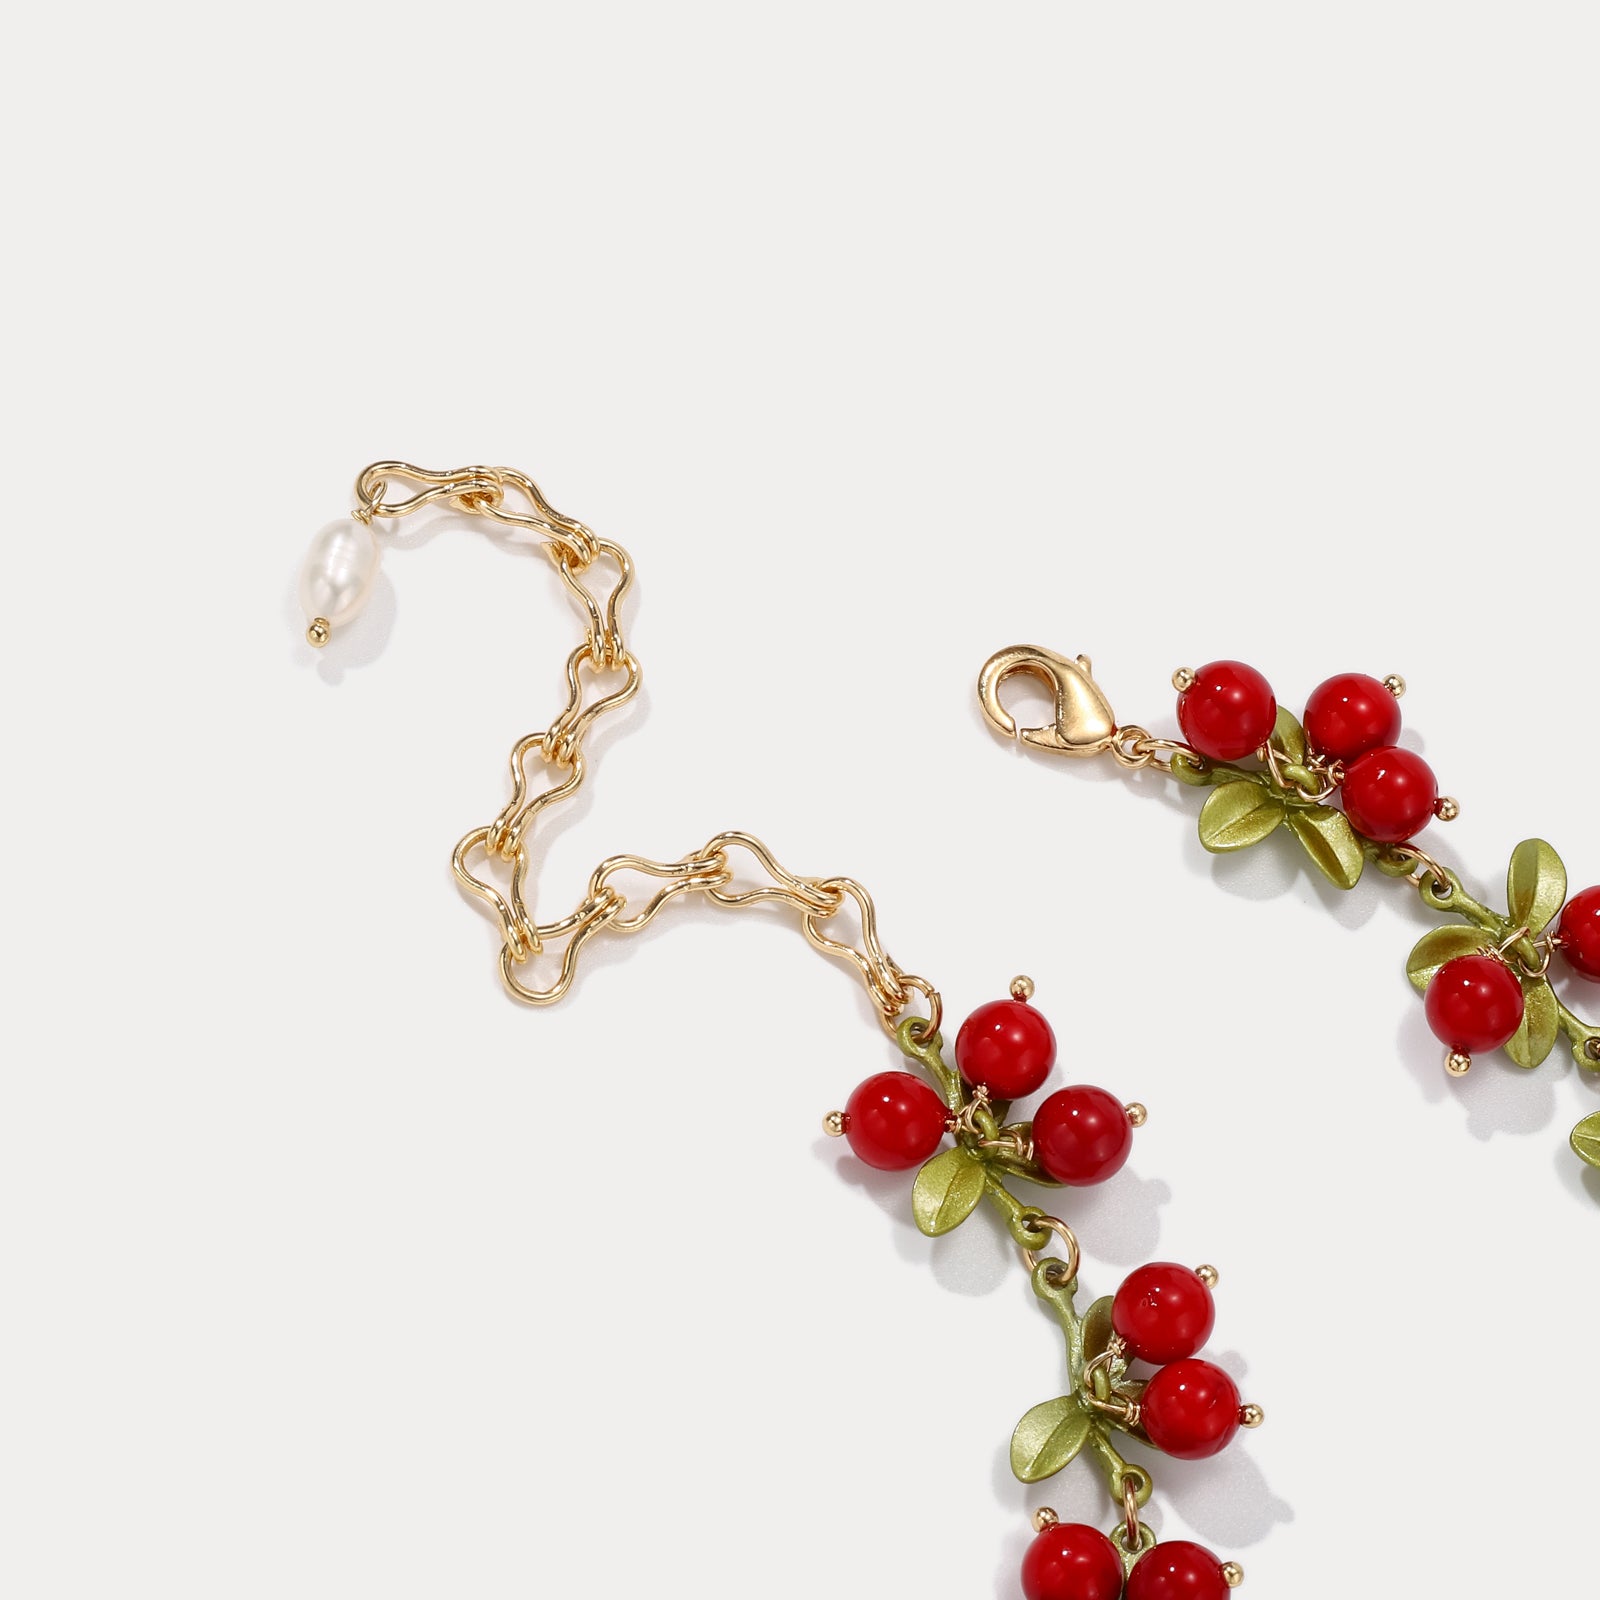 Cranberry Chain Necklace